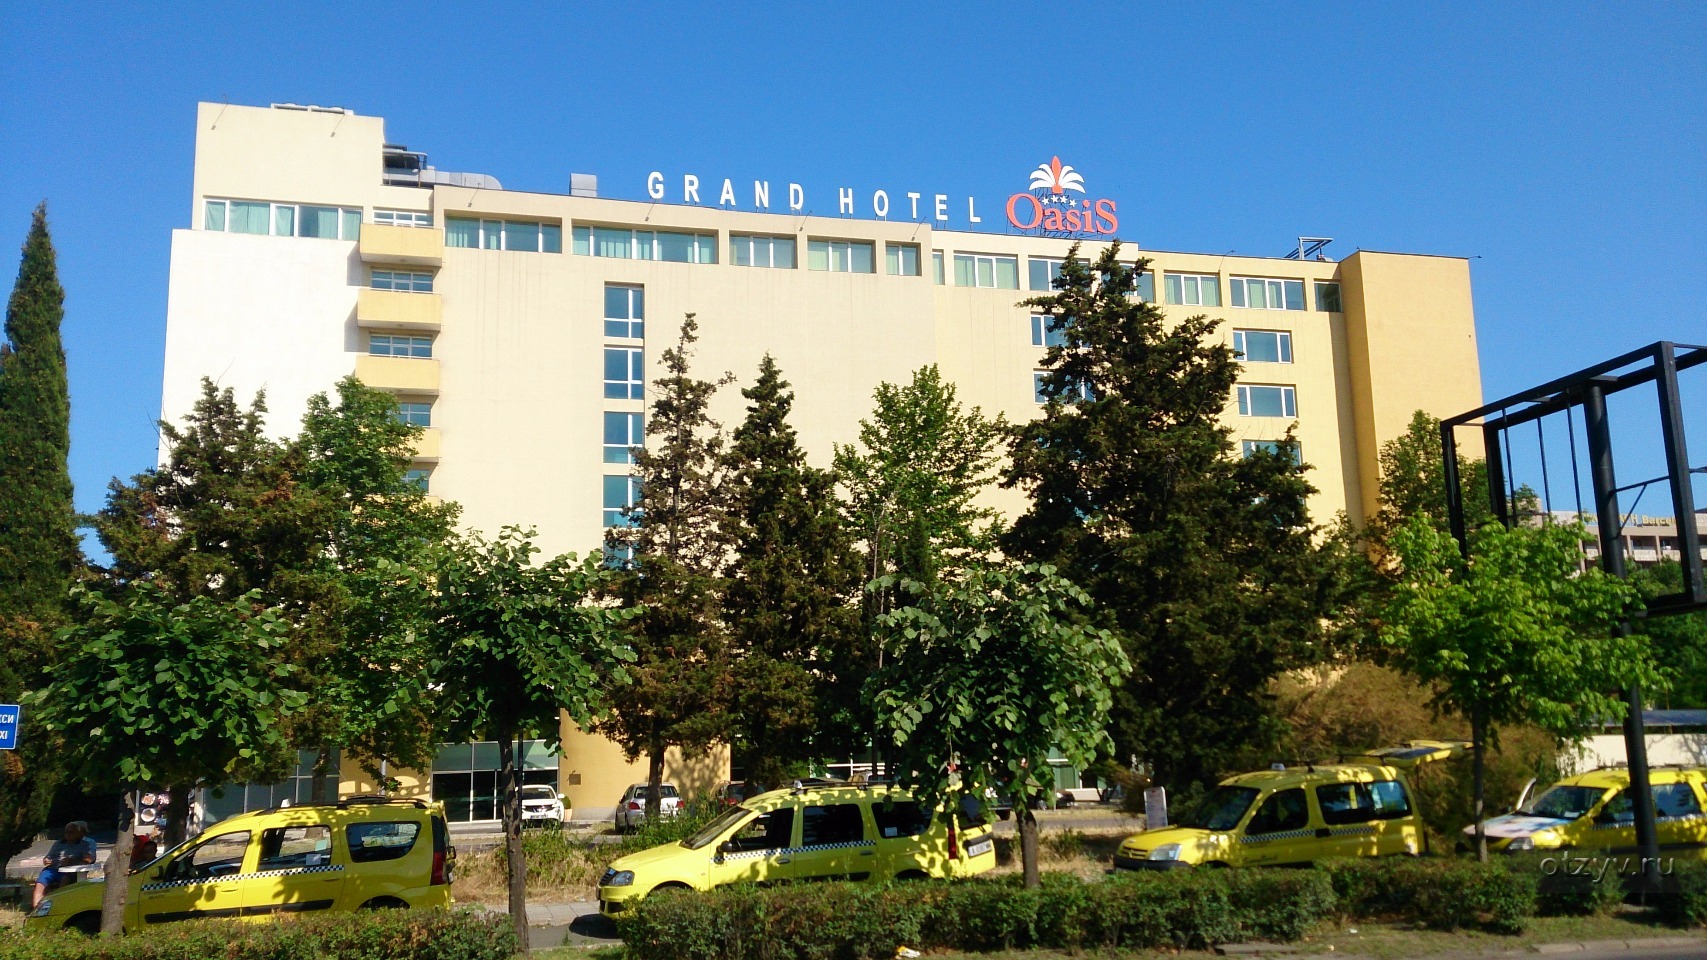 Grand Hotel Oasis